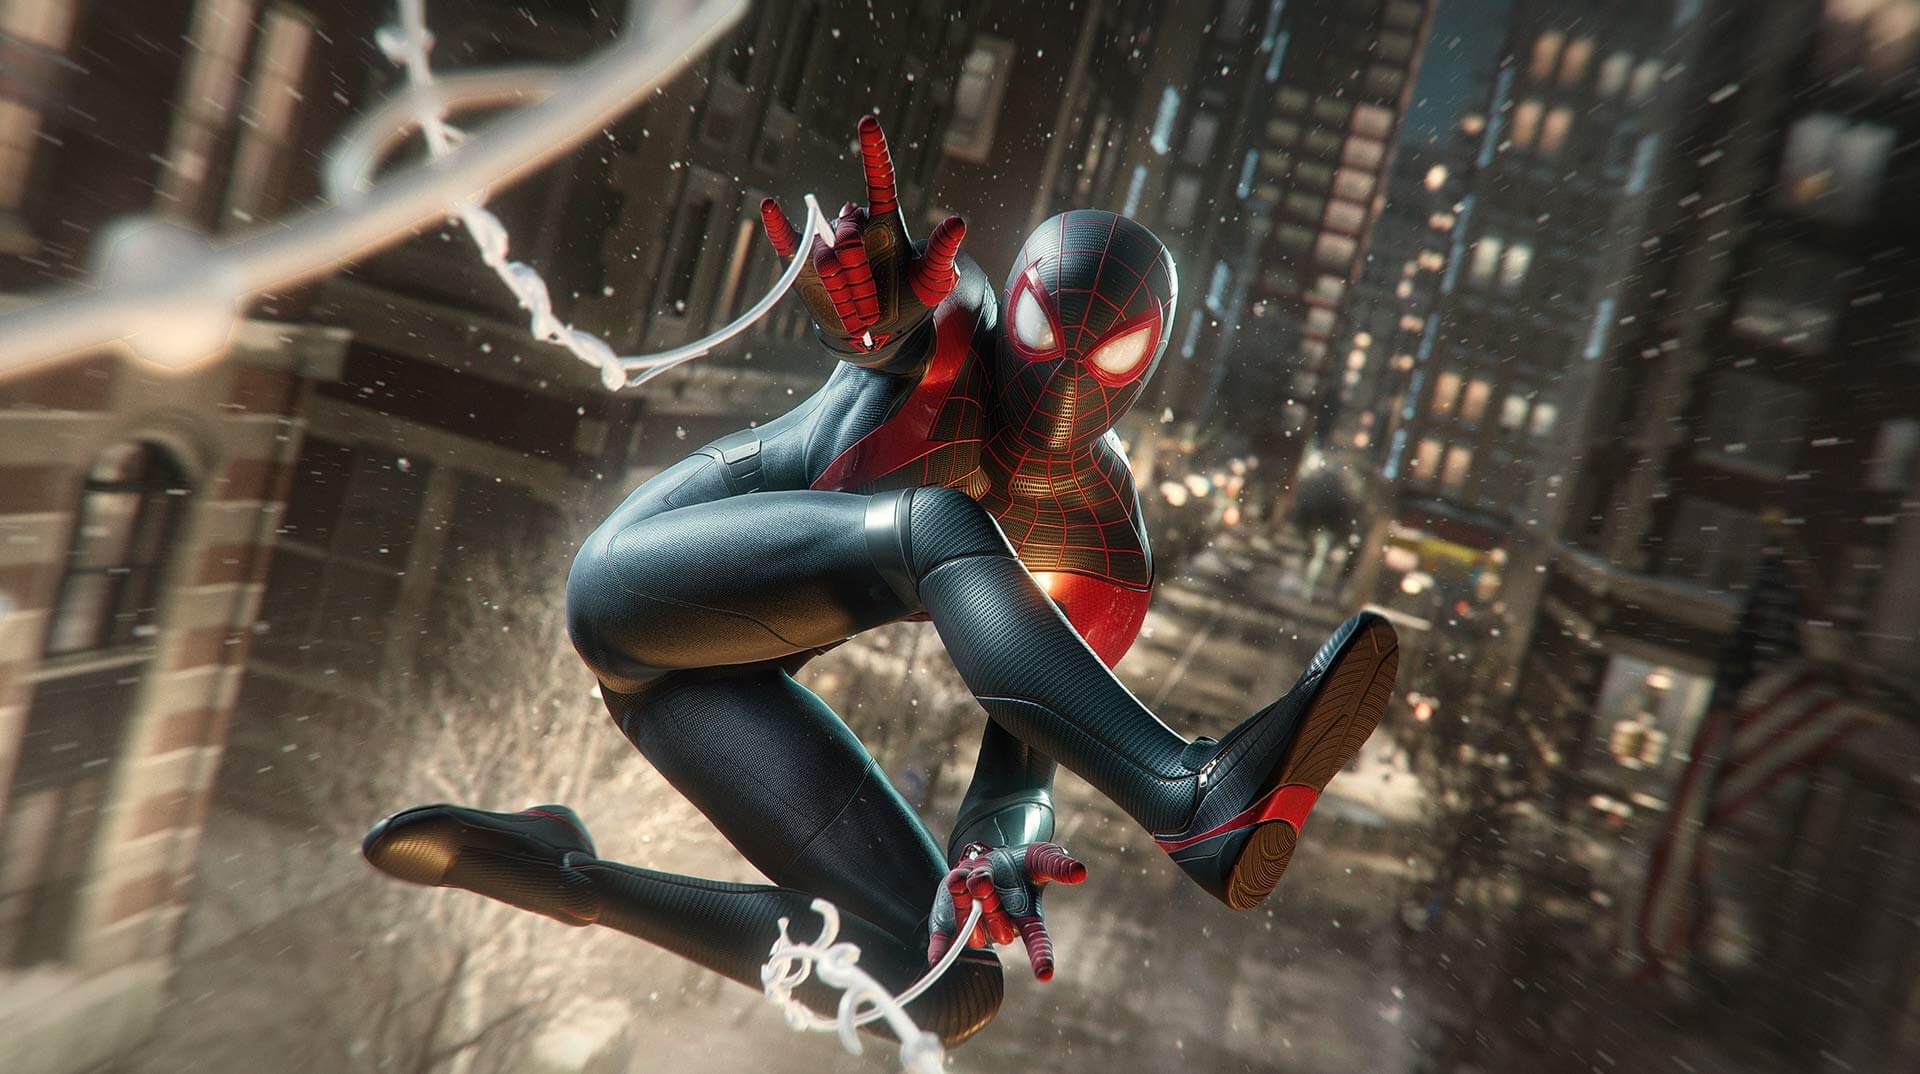 Spiderman Miles Morales PC Download & Gameplay